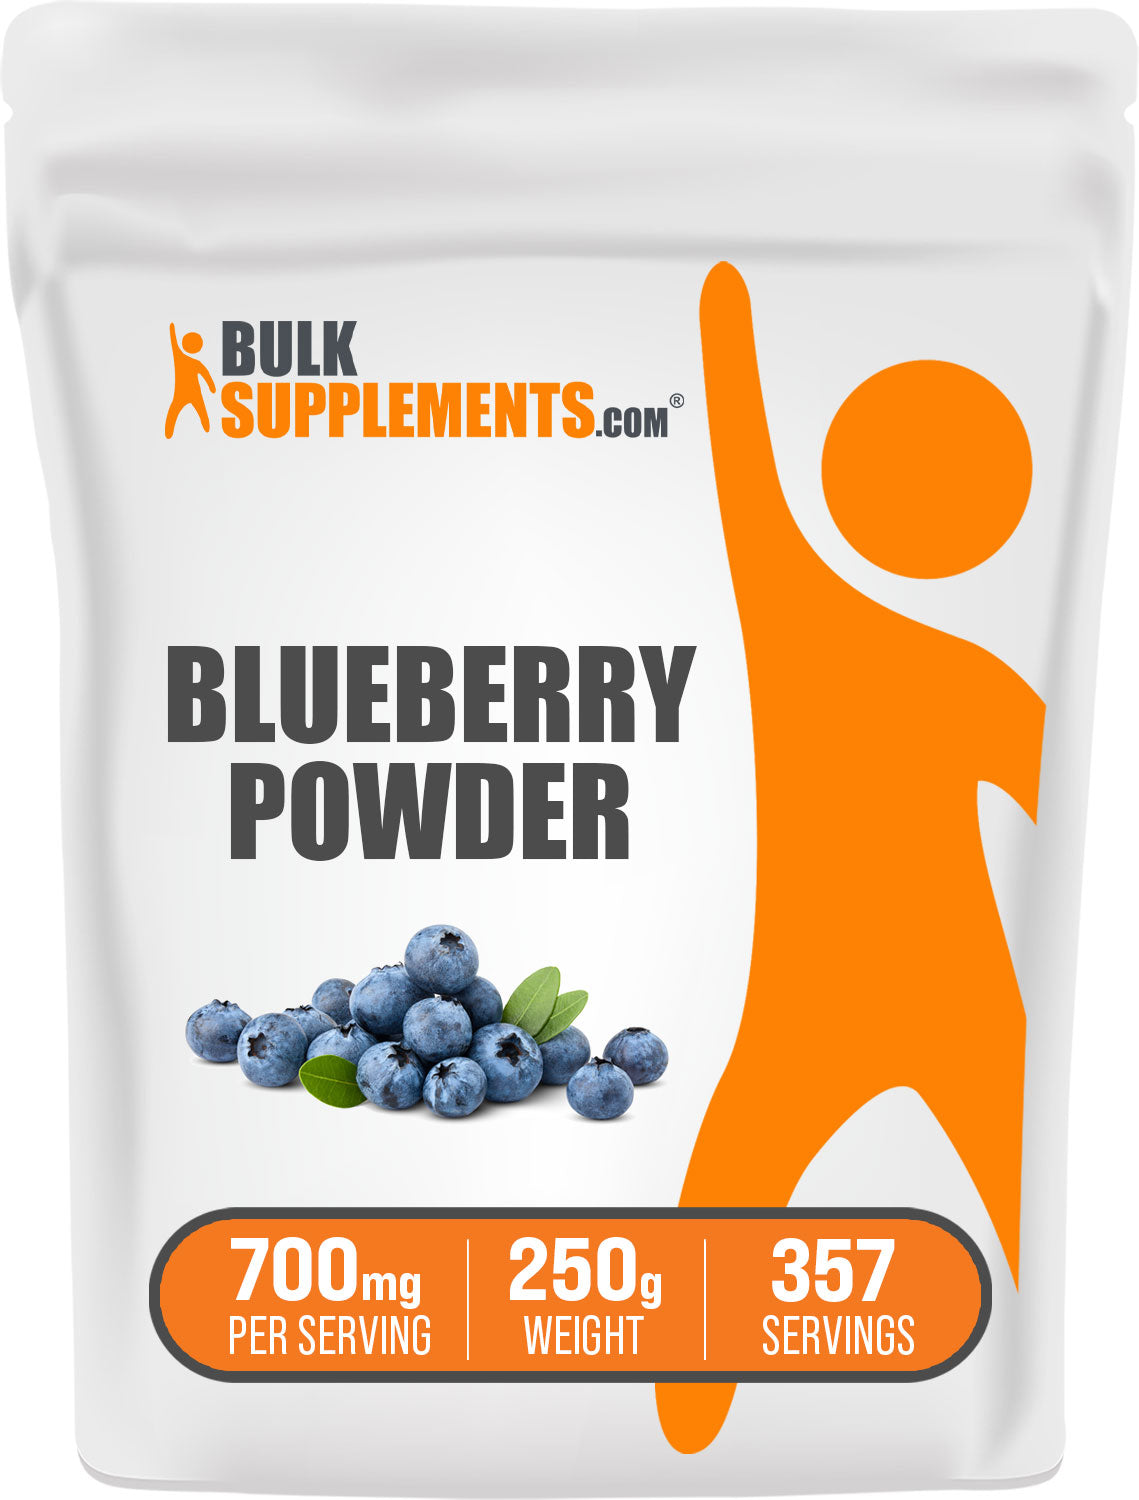 250g of Blueberry Powder